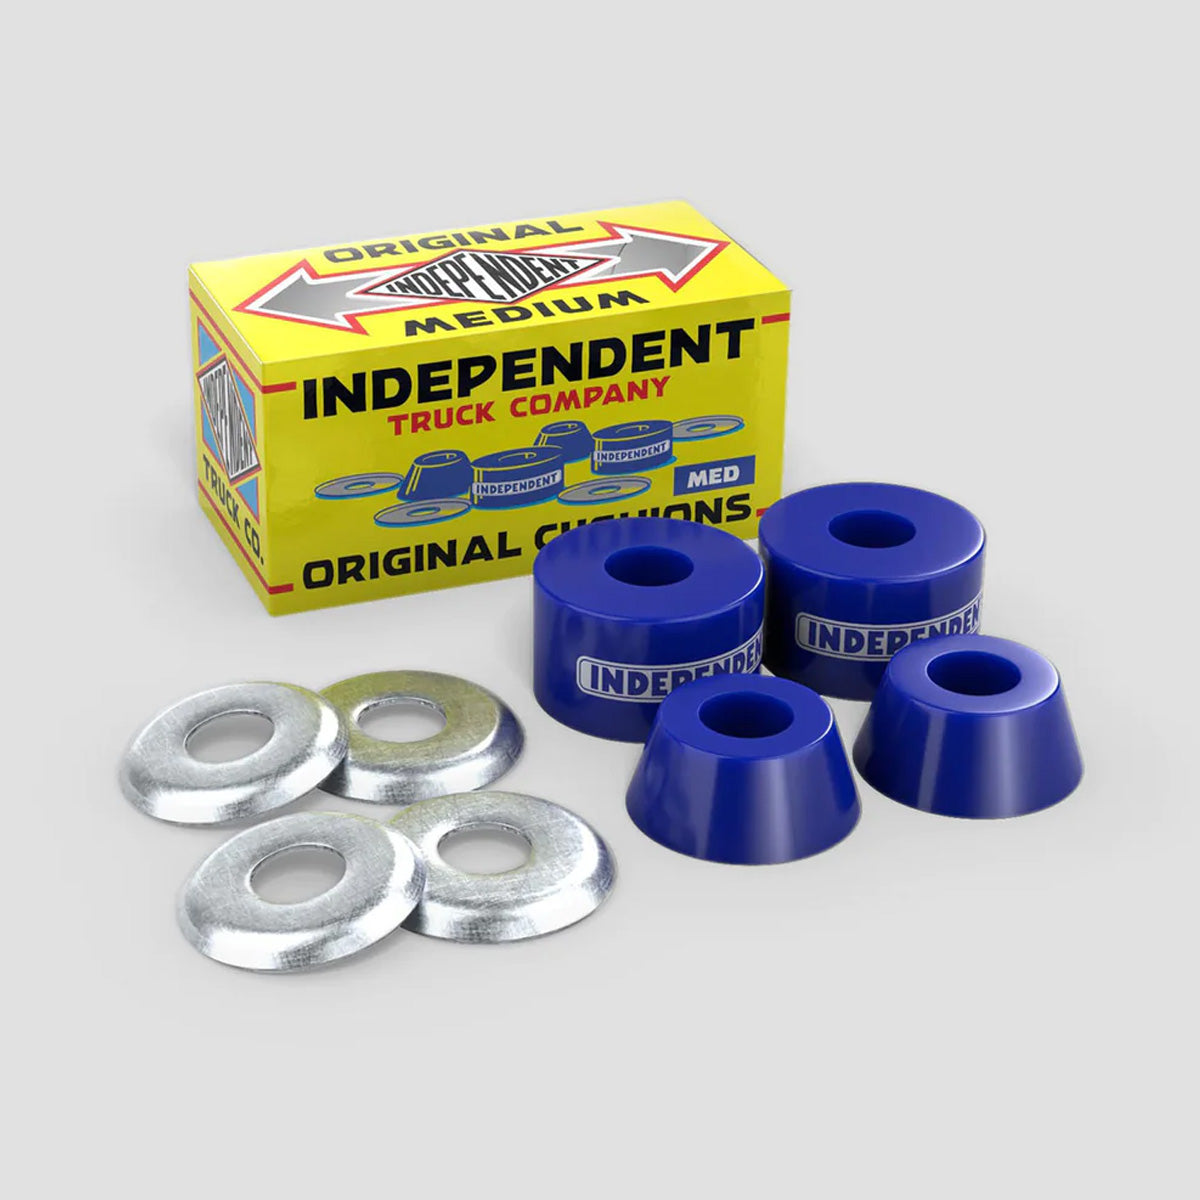 Independent Genuine Parts 92a Medium Original Bushings Blue